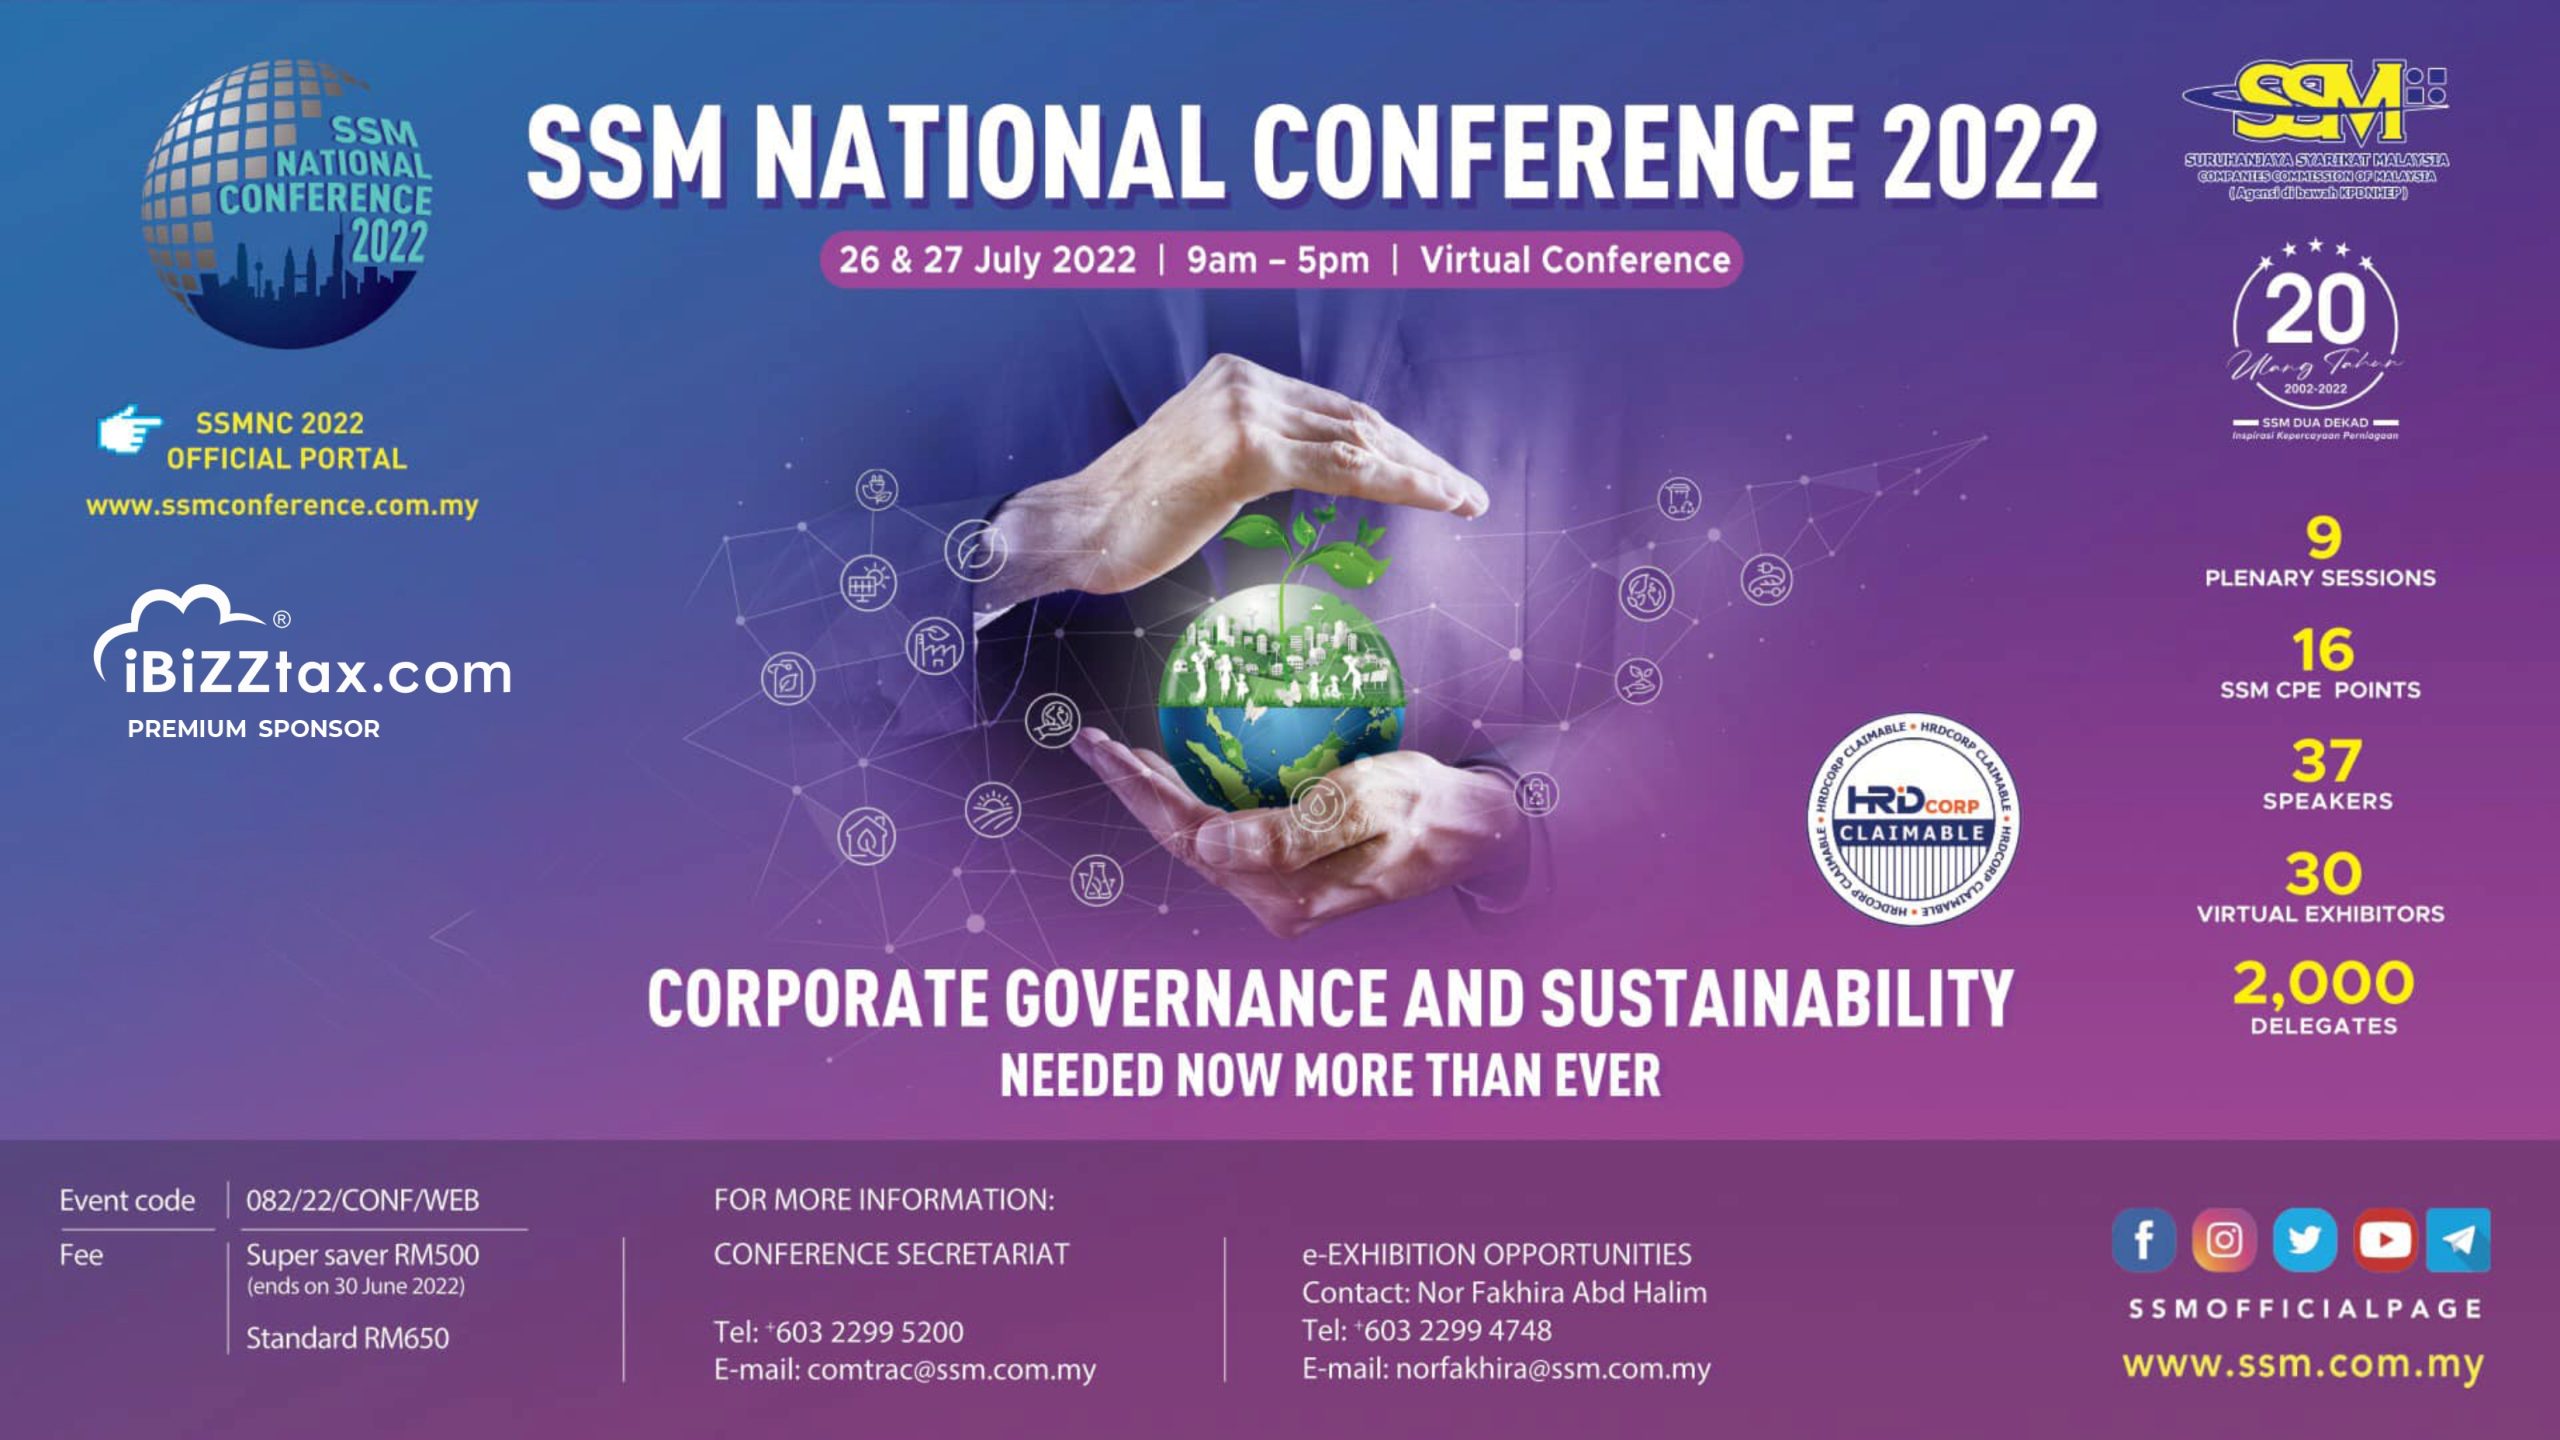 Premium Sponsor of SSM National Conference 2022